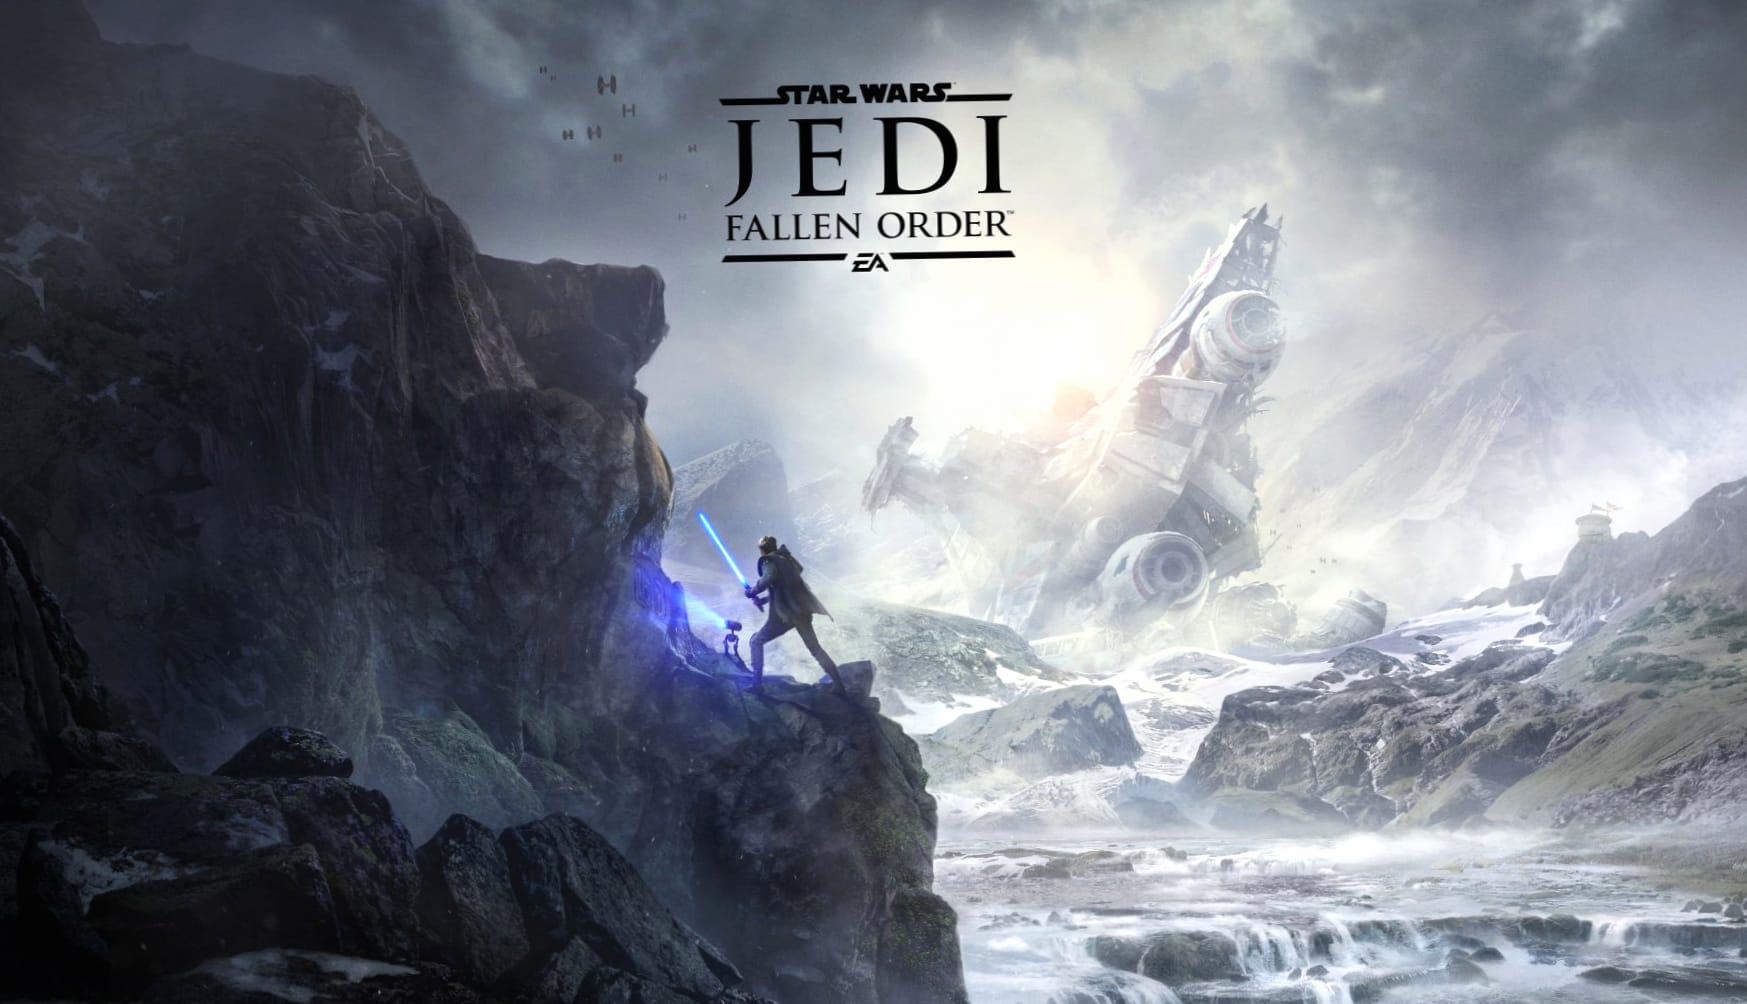 Star Wars Jedi Fallen Order at 1280 x 960 size wallpapers HD quality